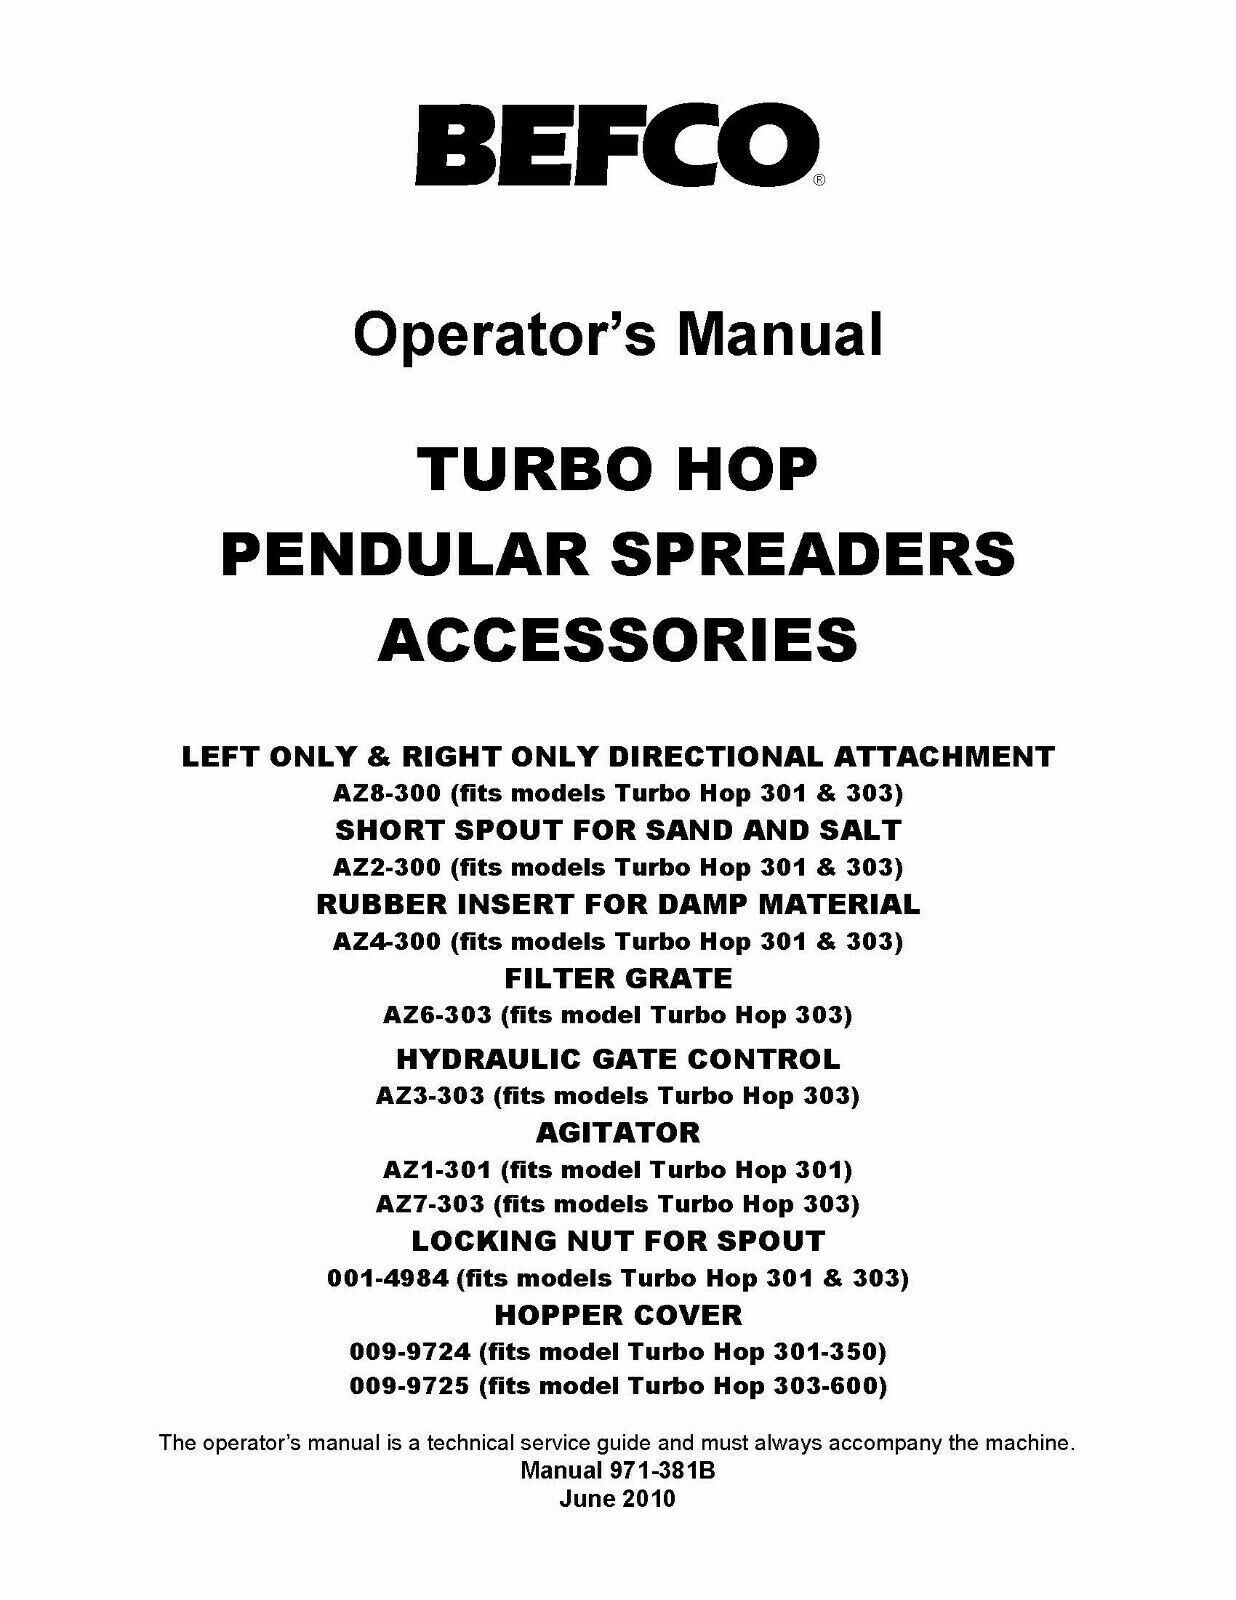 Operator Instructions Maint Manua BEFCO Turbo Hop Pendular Spreaders Accessories